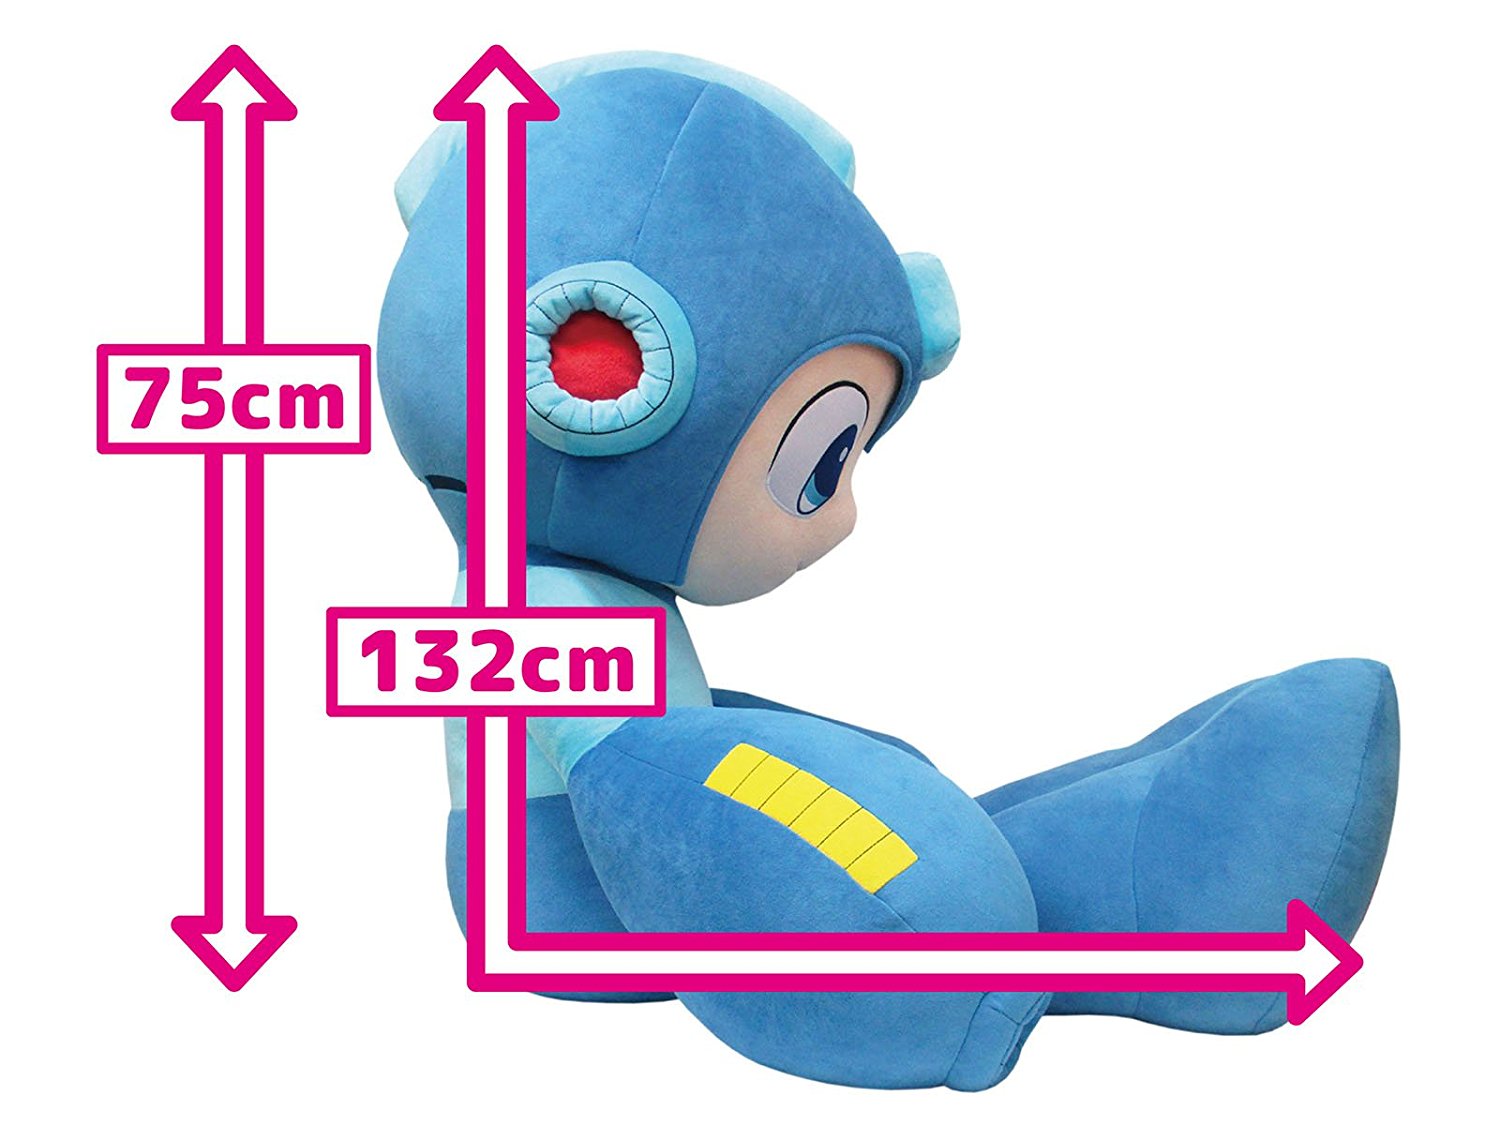 Rockman Mega Man Cartoon 10" Stuffed Animal Megaman Game Character Plush Toy 